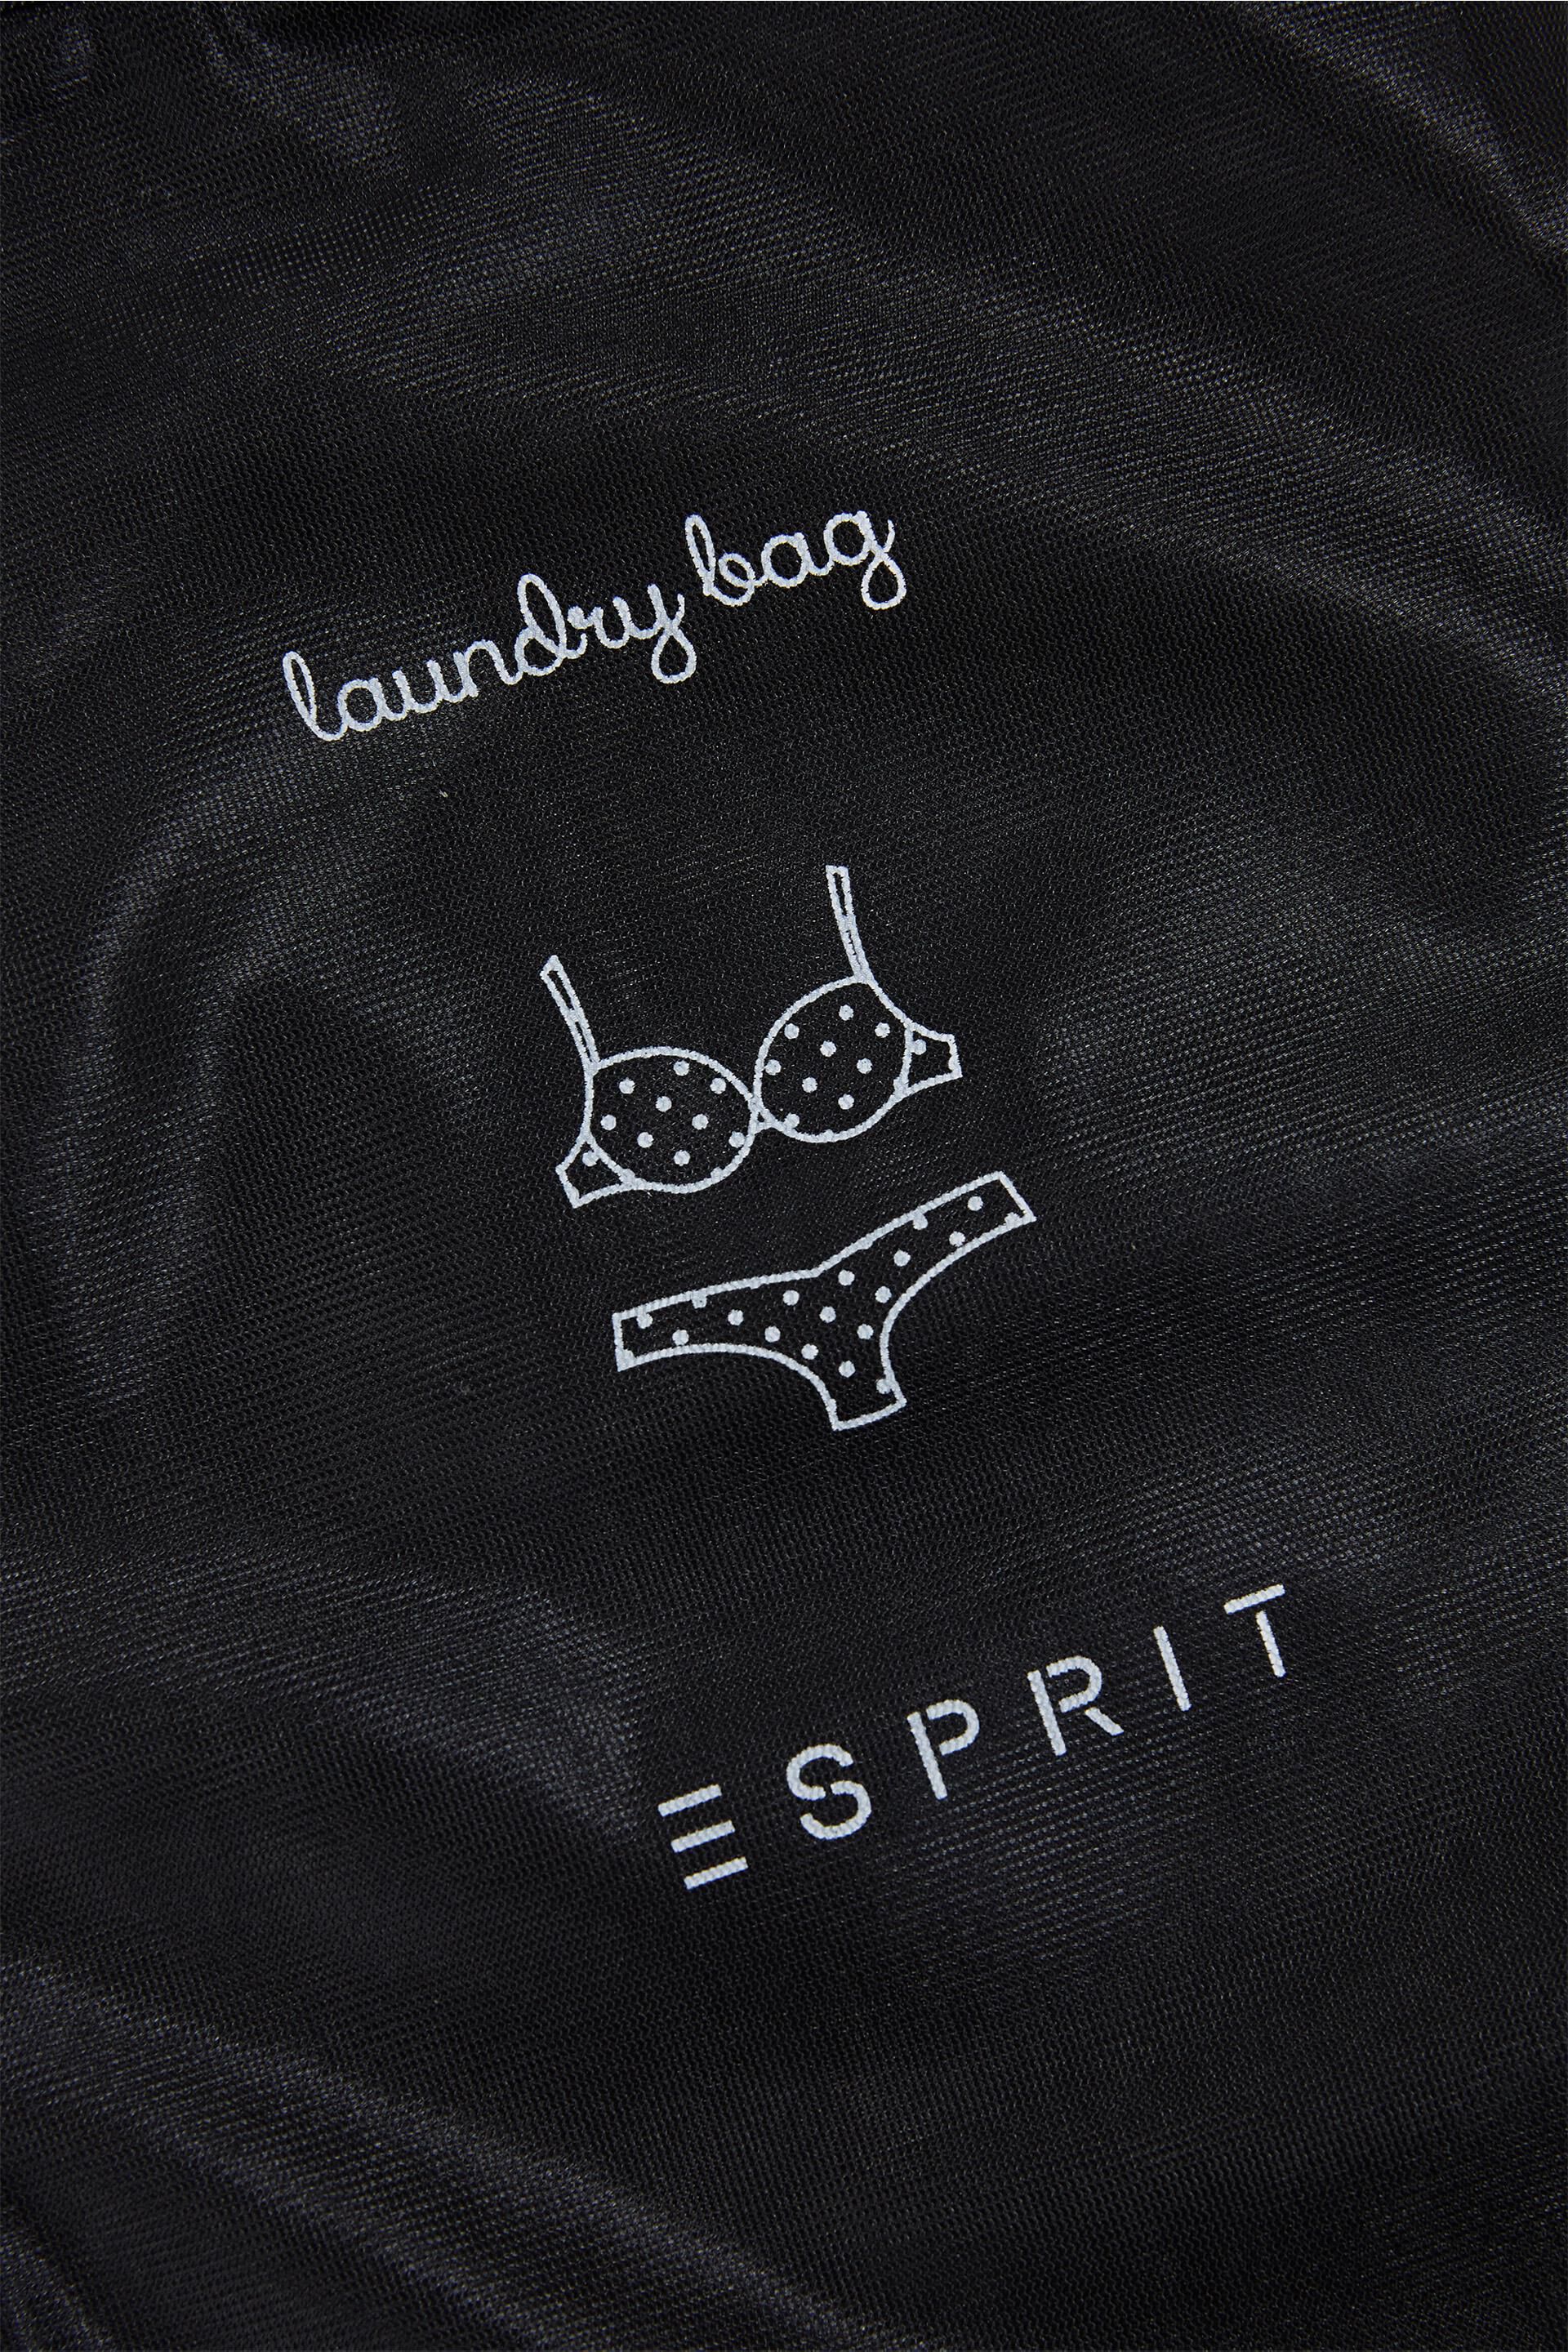 Esprit Zip laundry bag